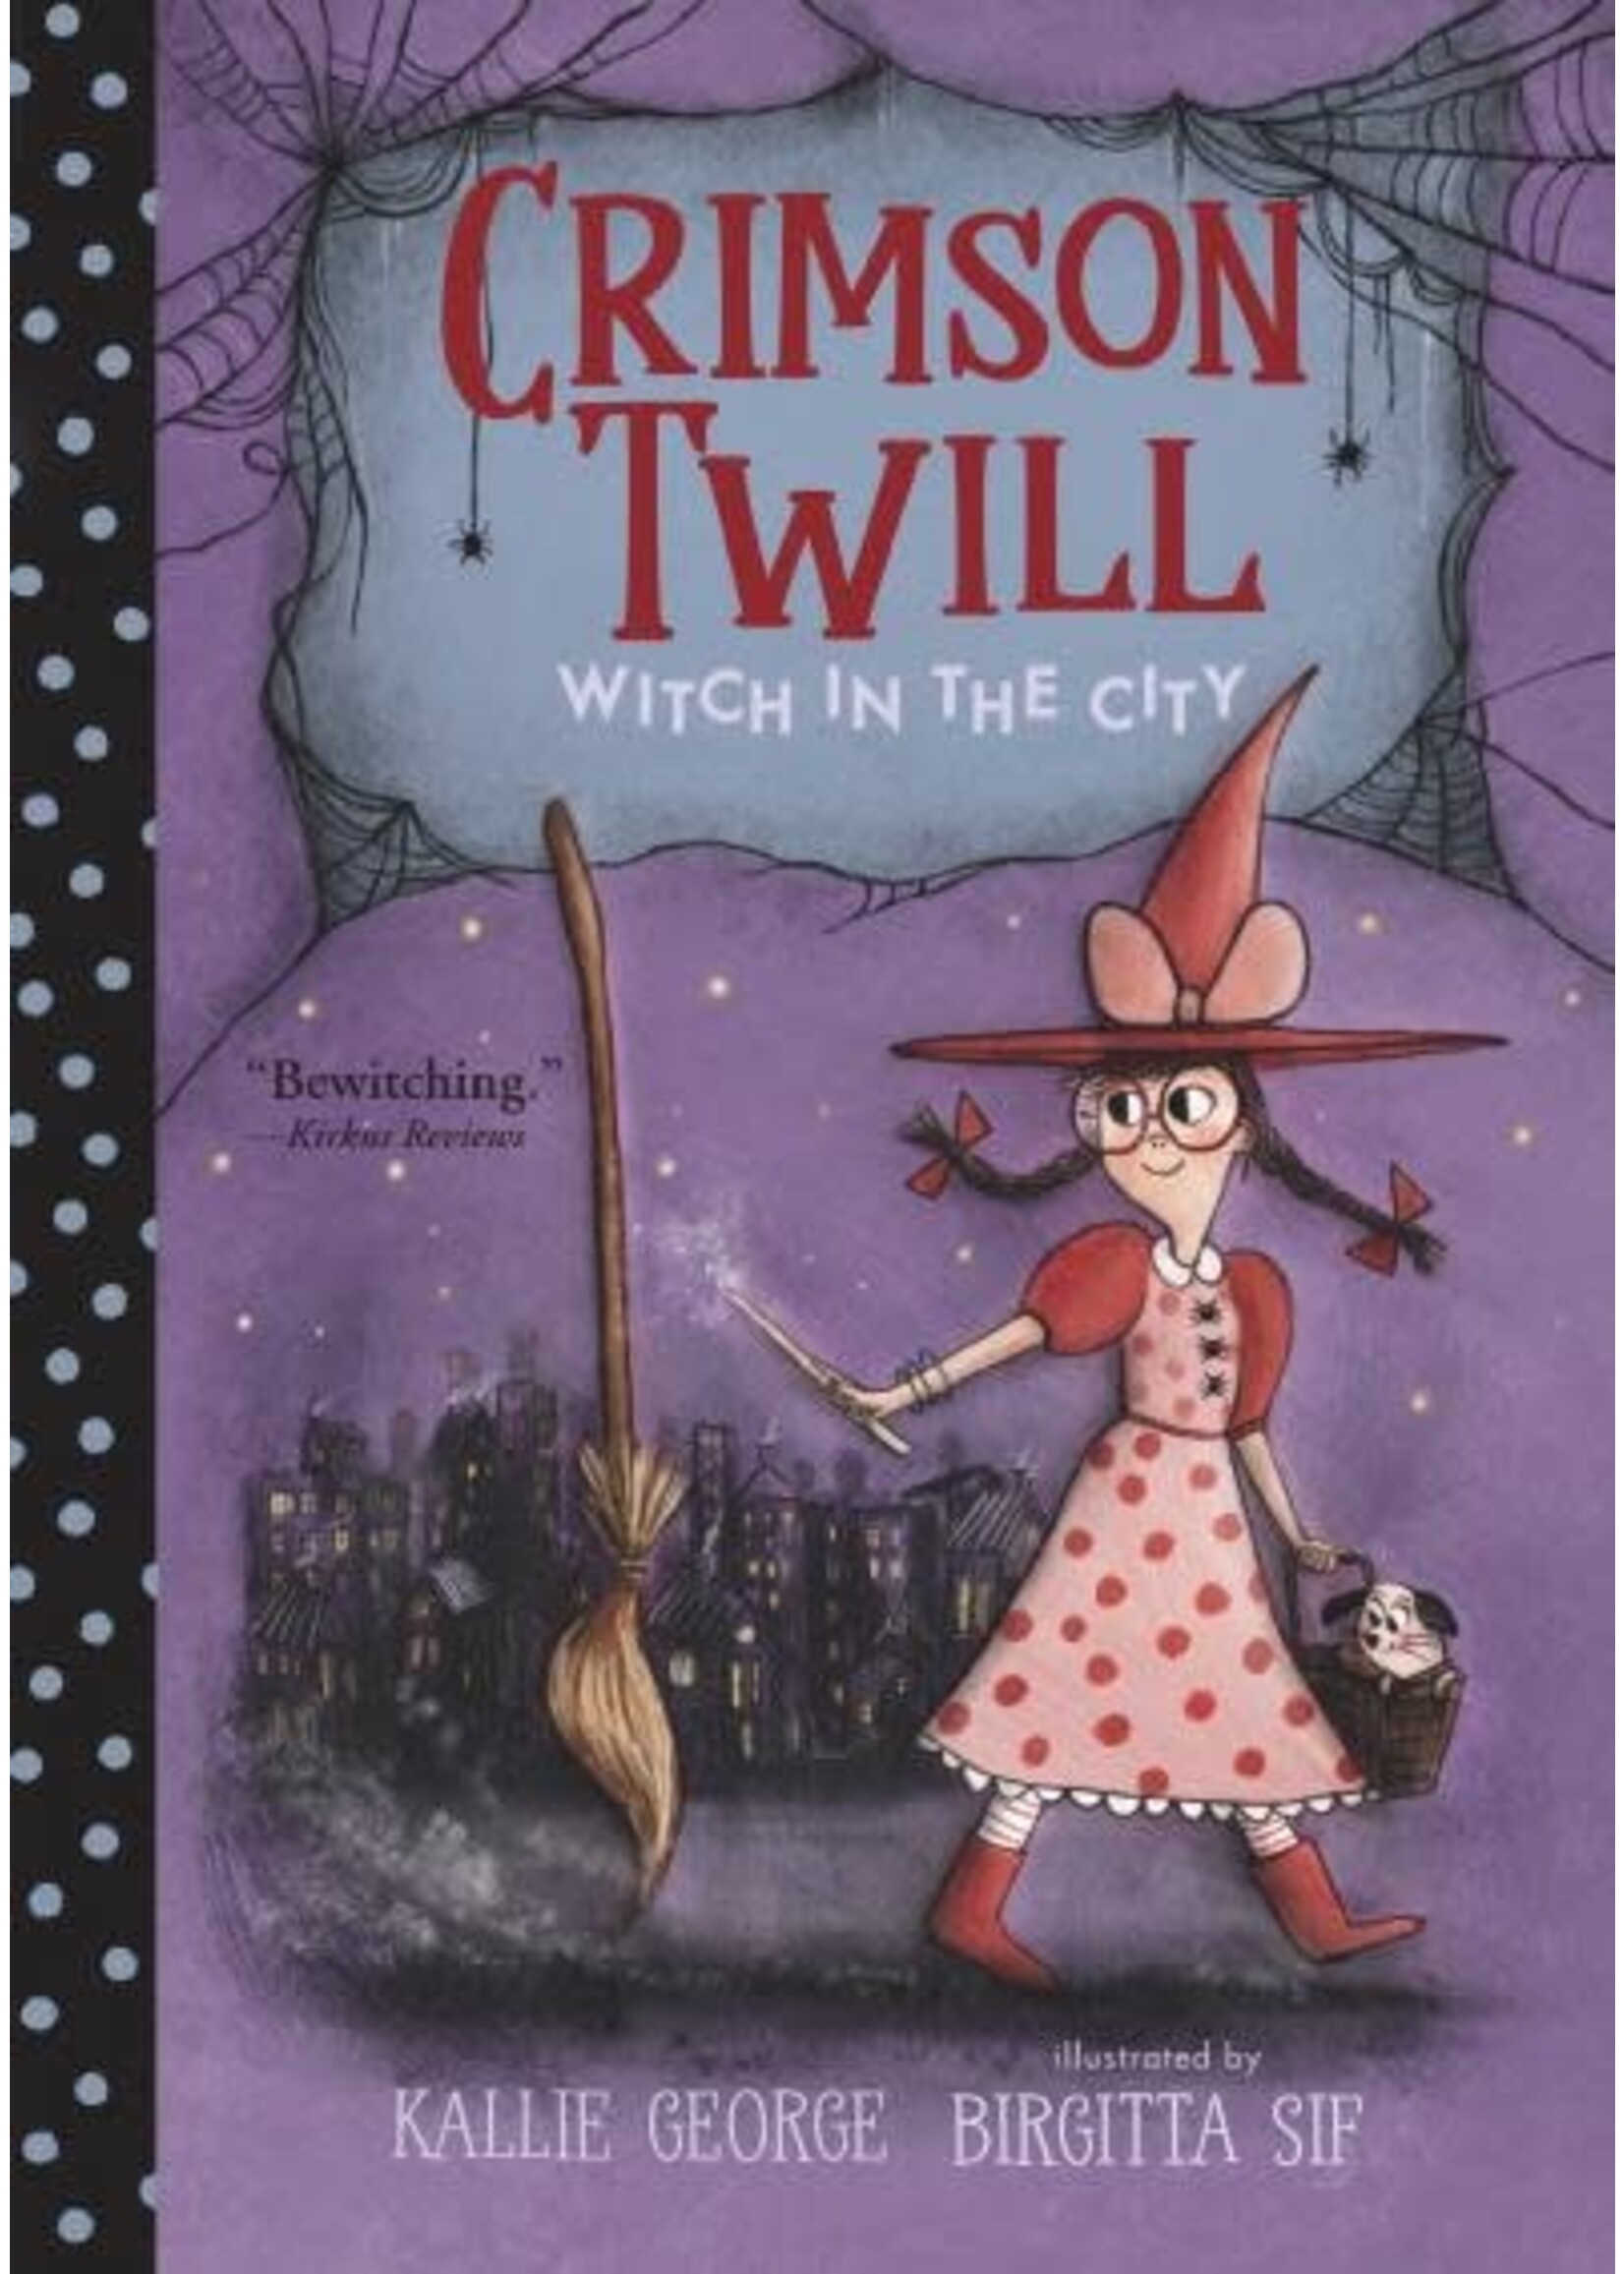 Crimson Twill: Witch in the City by Kallie George, Birgitta Sif